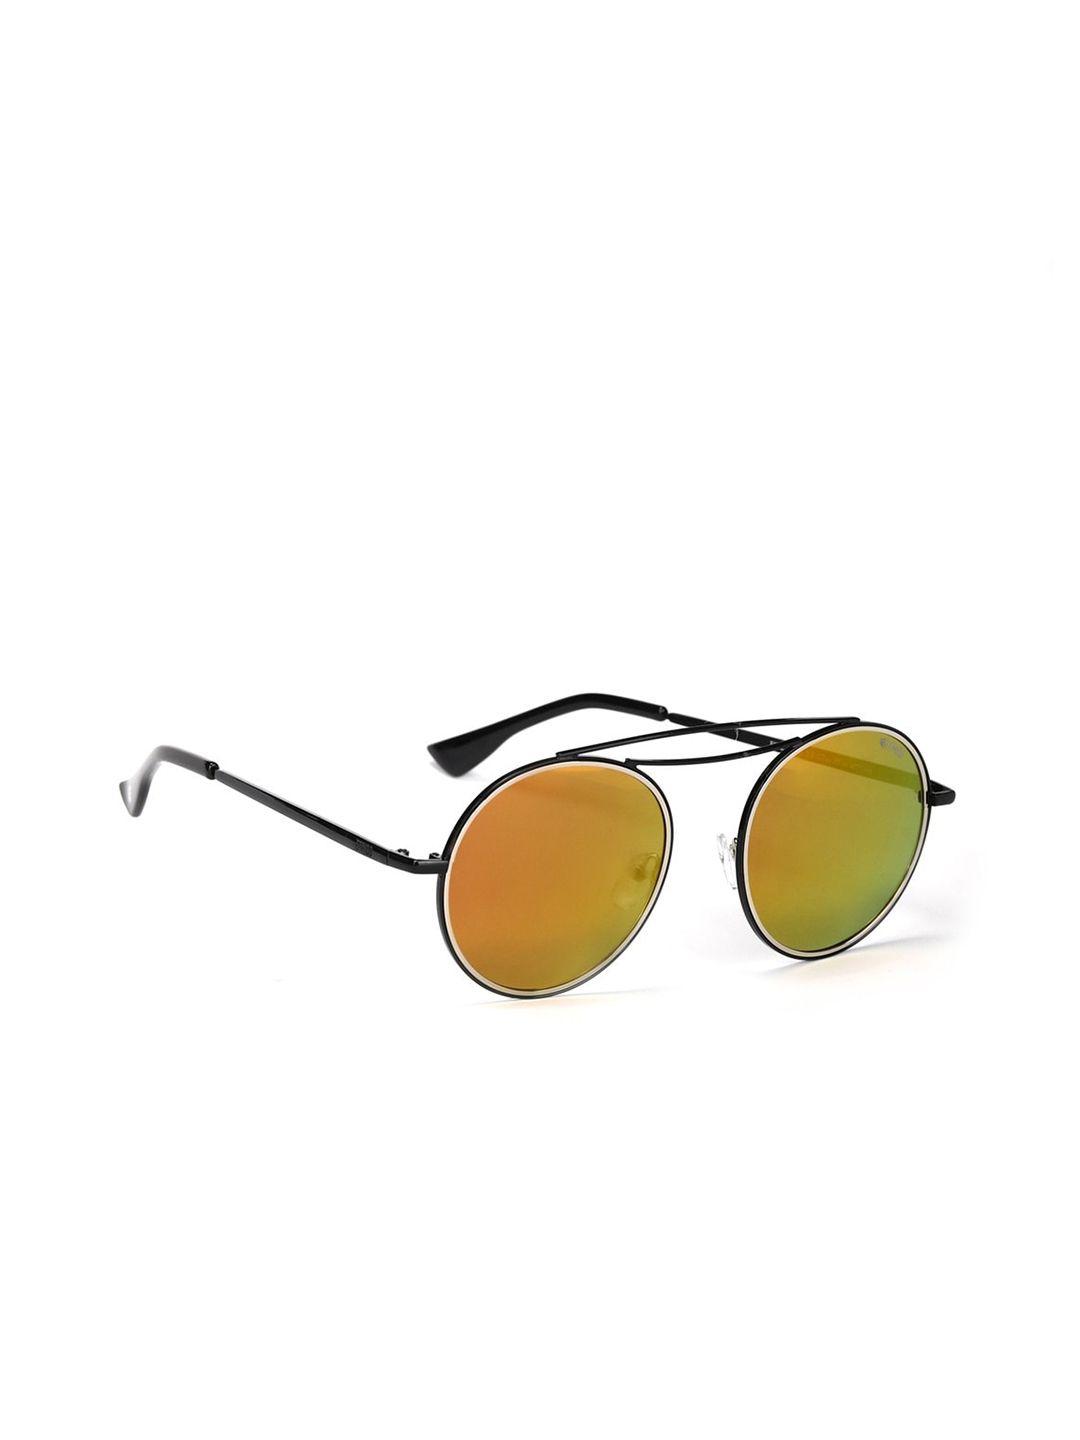 enrico unisex yellow lens & black round sunglasses - en e 3028 c3-yellow